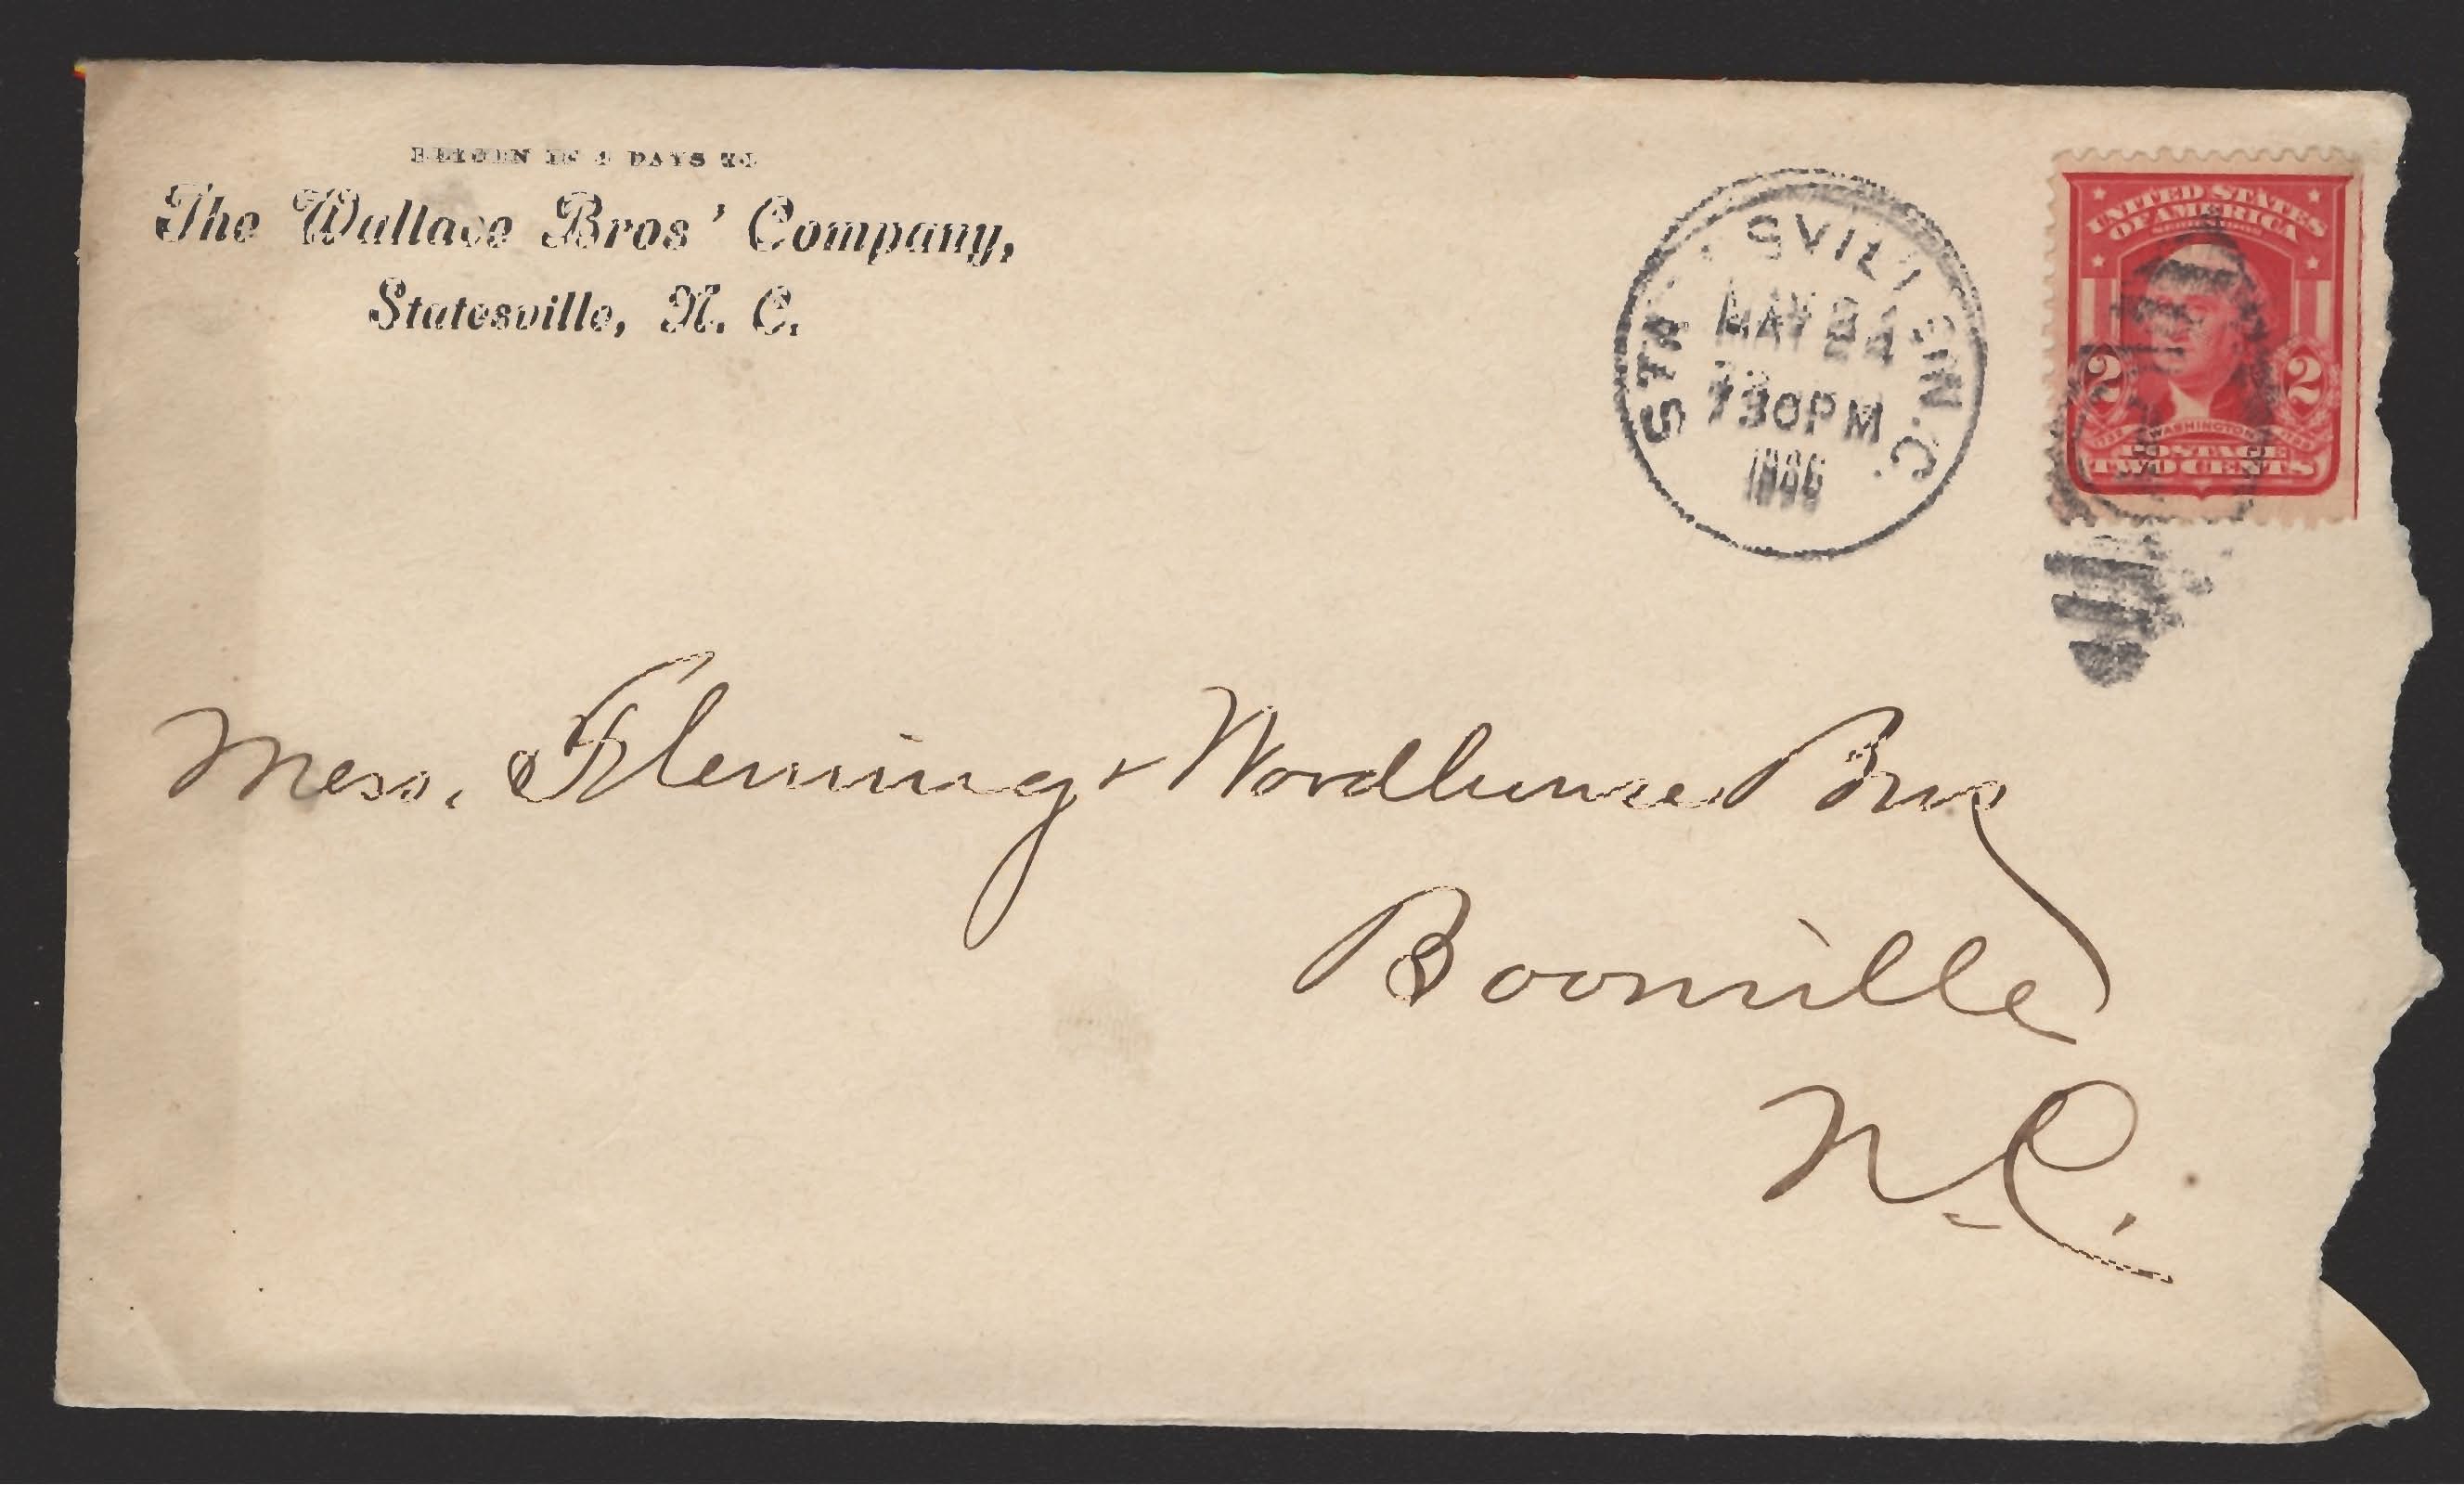 An addressed envelope